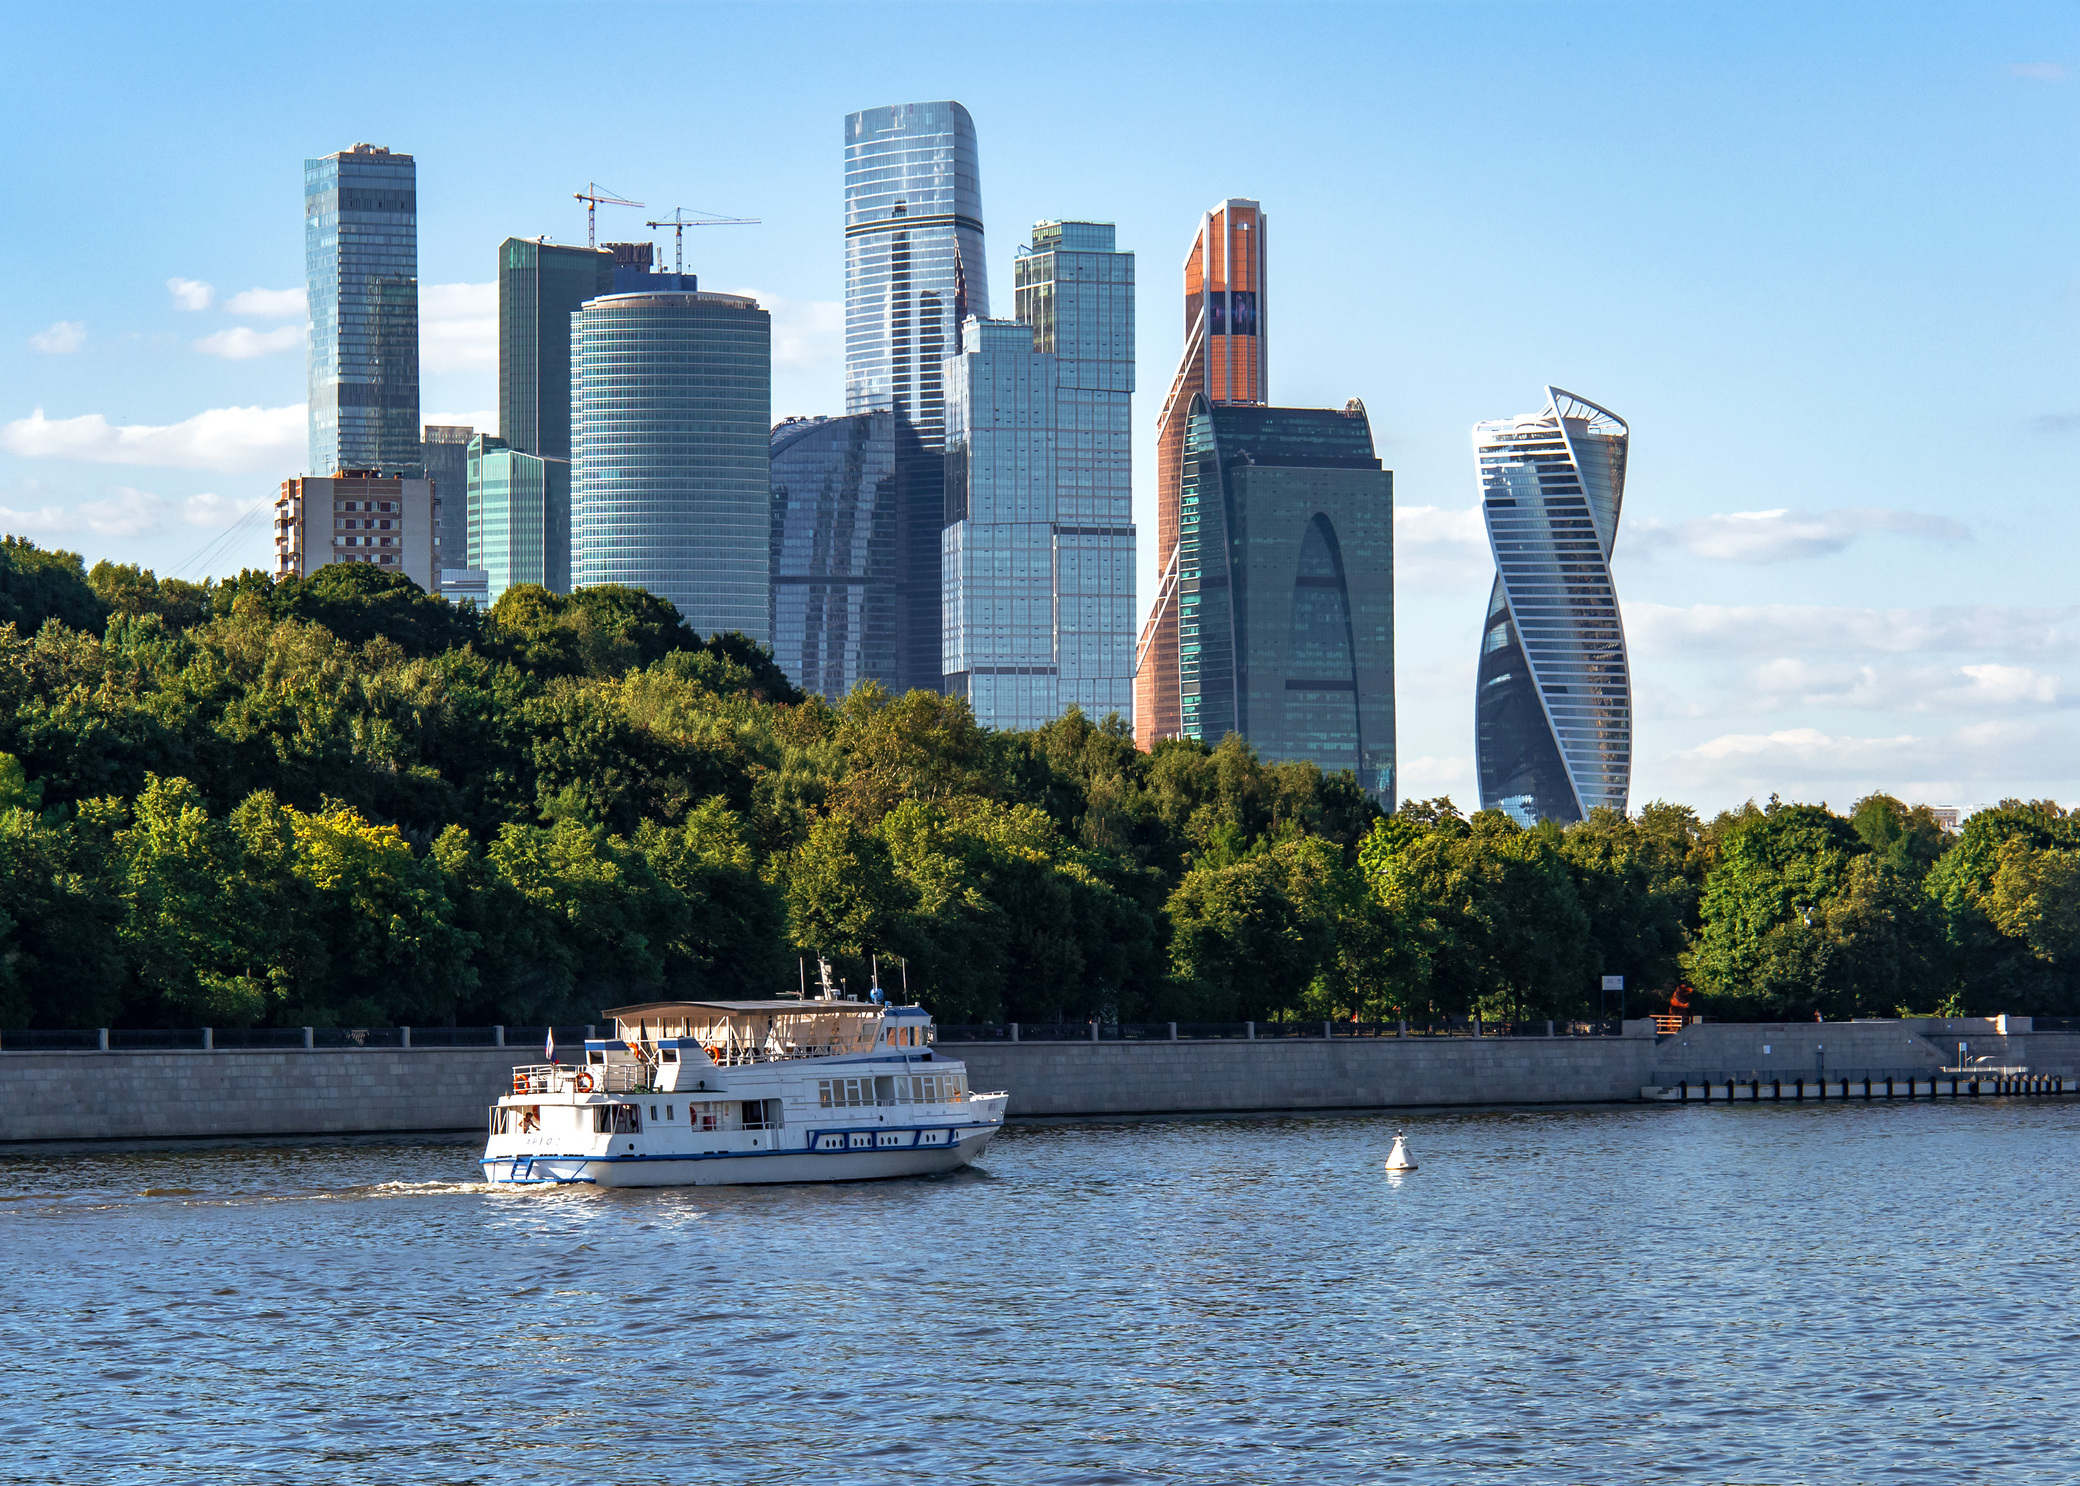 Вид на Москва-Сити с Лужнецкой набережной